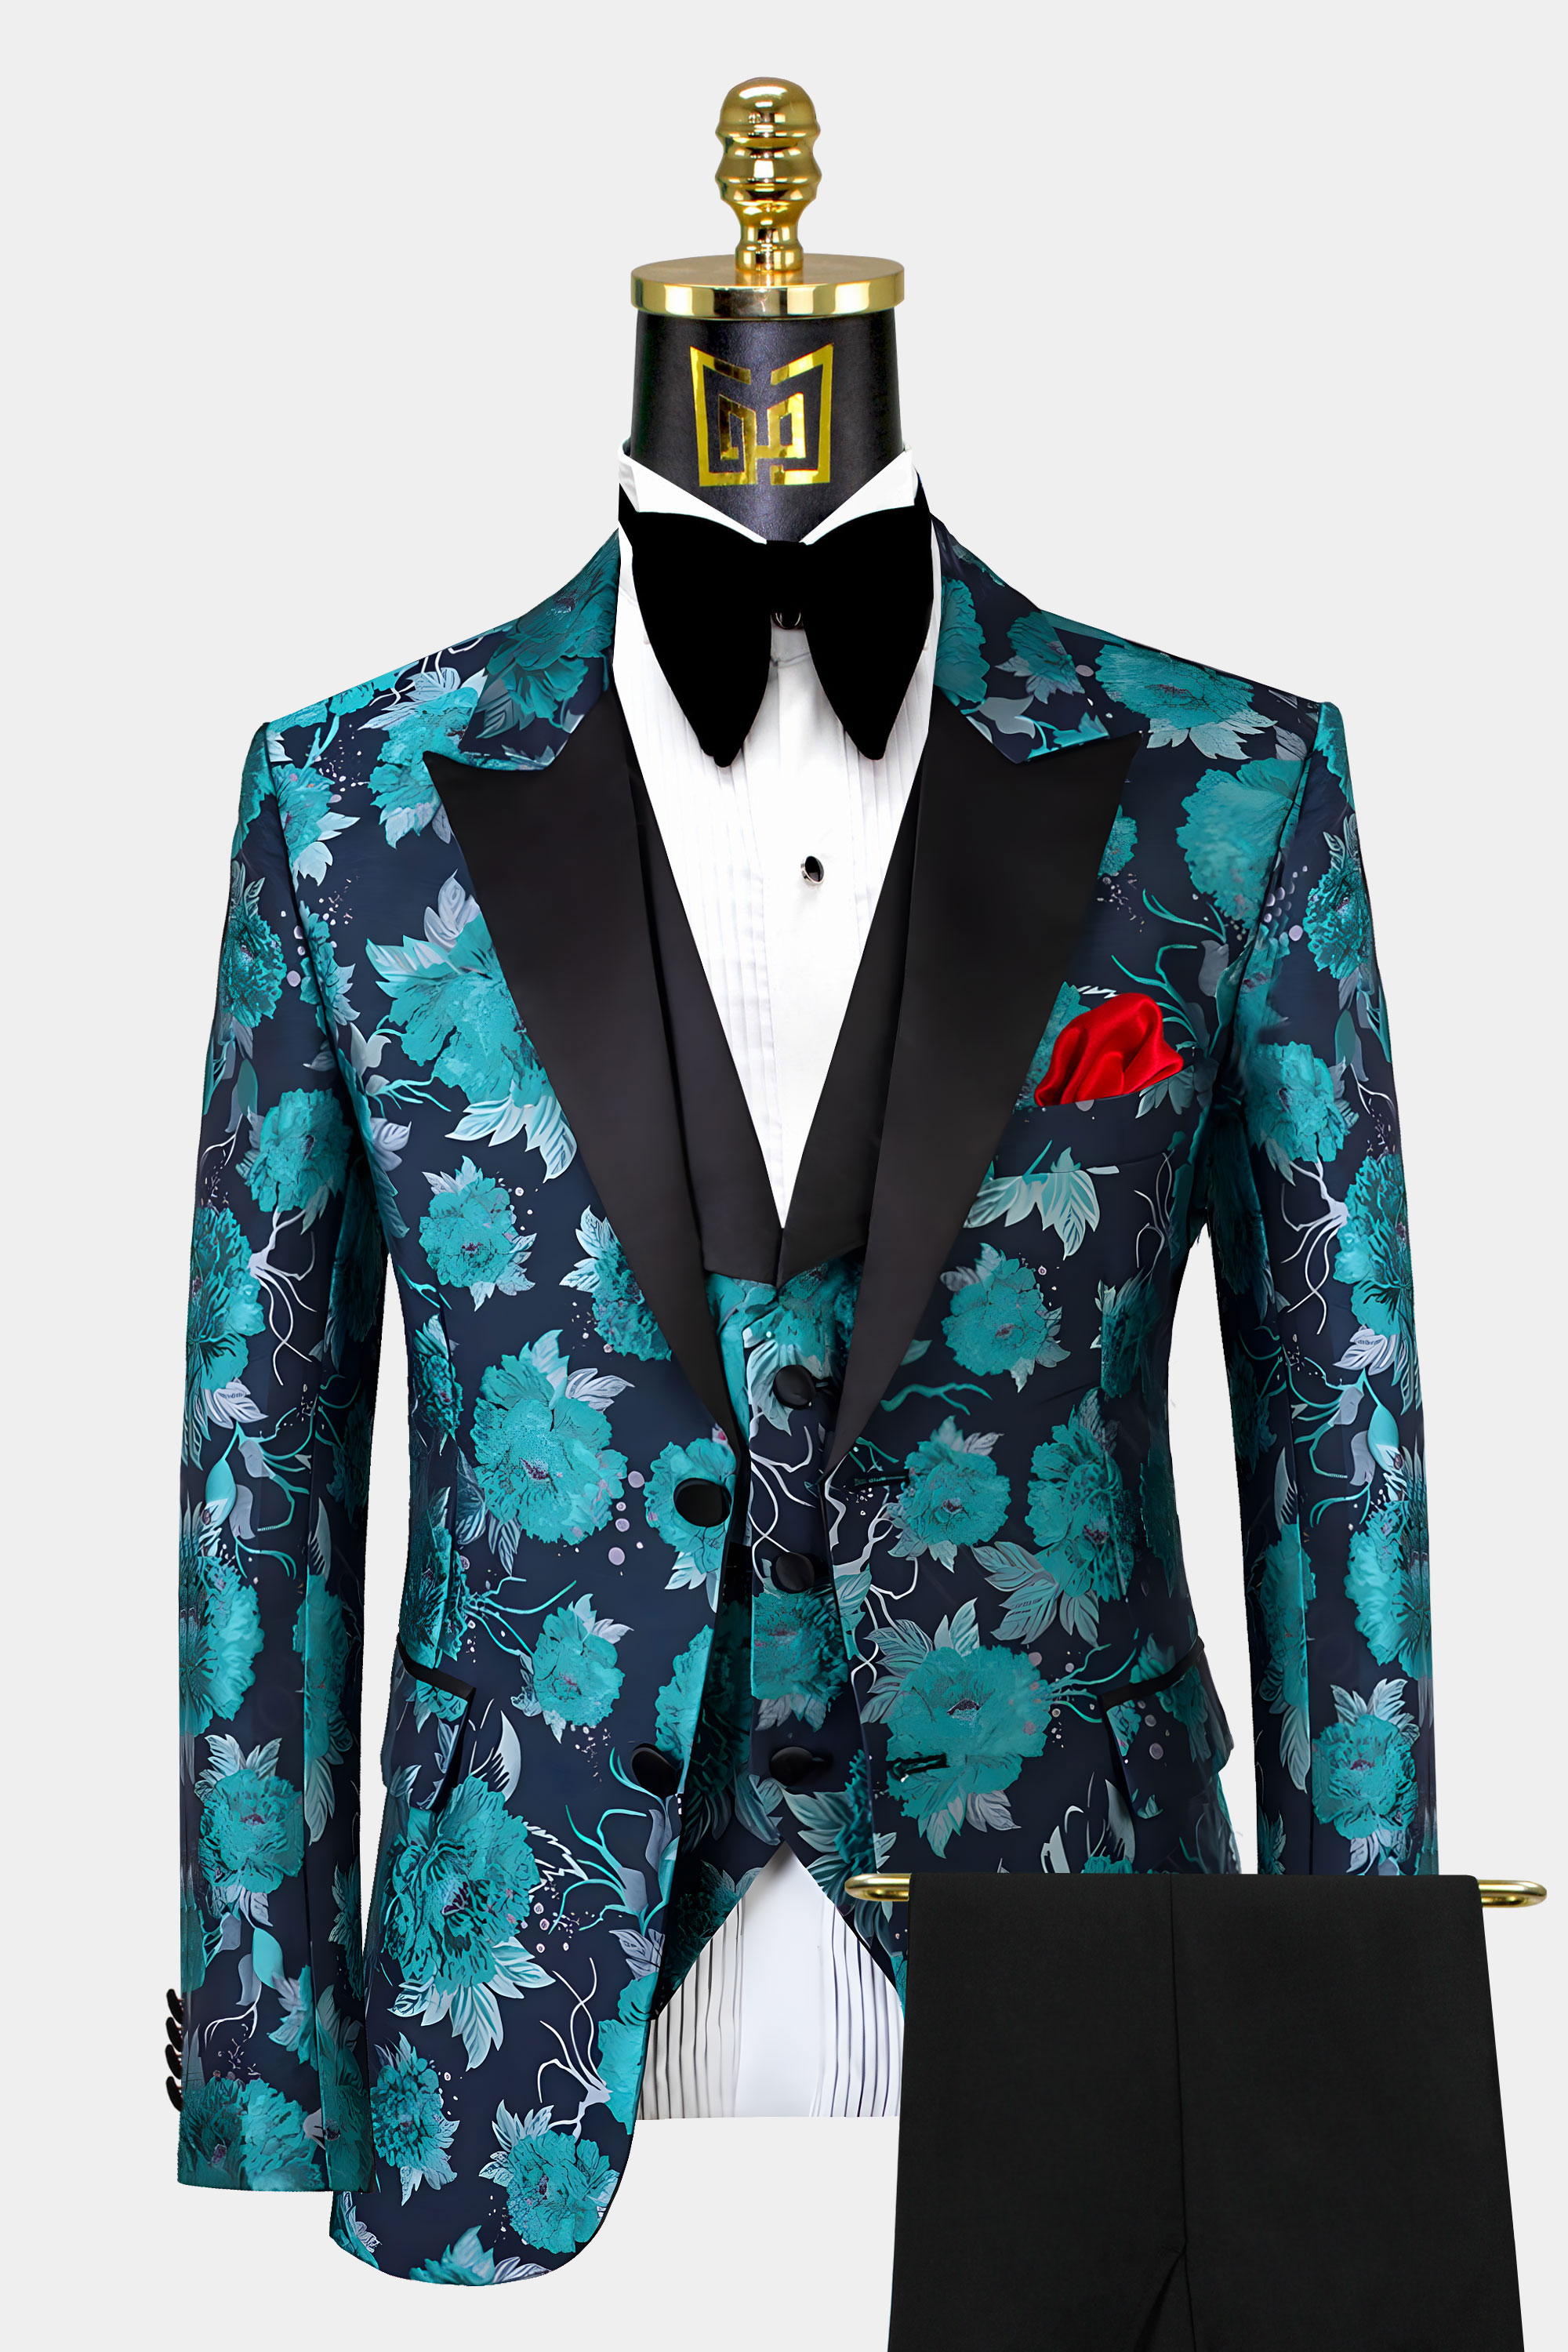 Mens-Black-and-Turquoise-Tuxedo-Wedding-Groom-Prom-Suit-from-Gentlemansguru.com